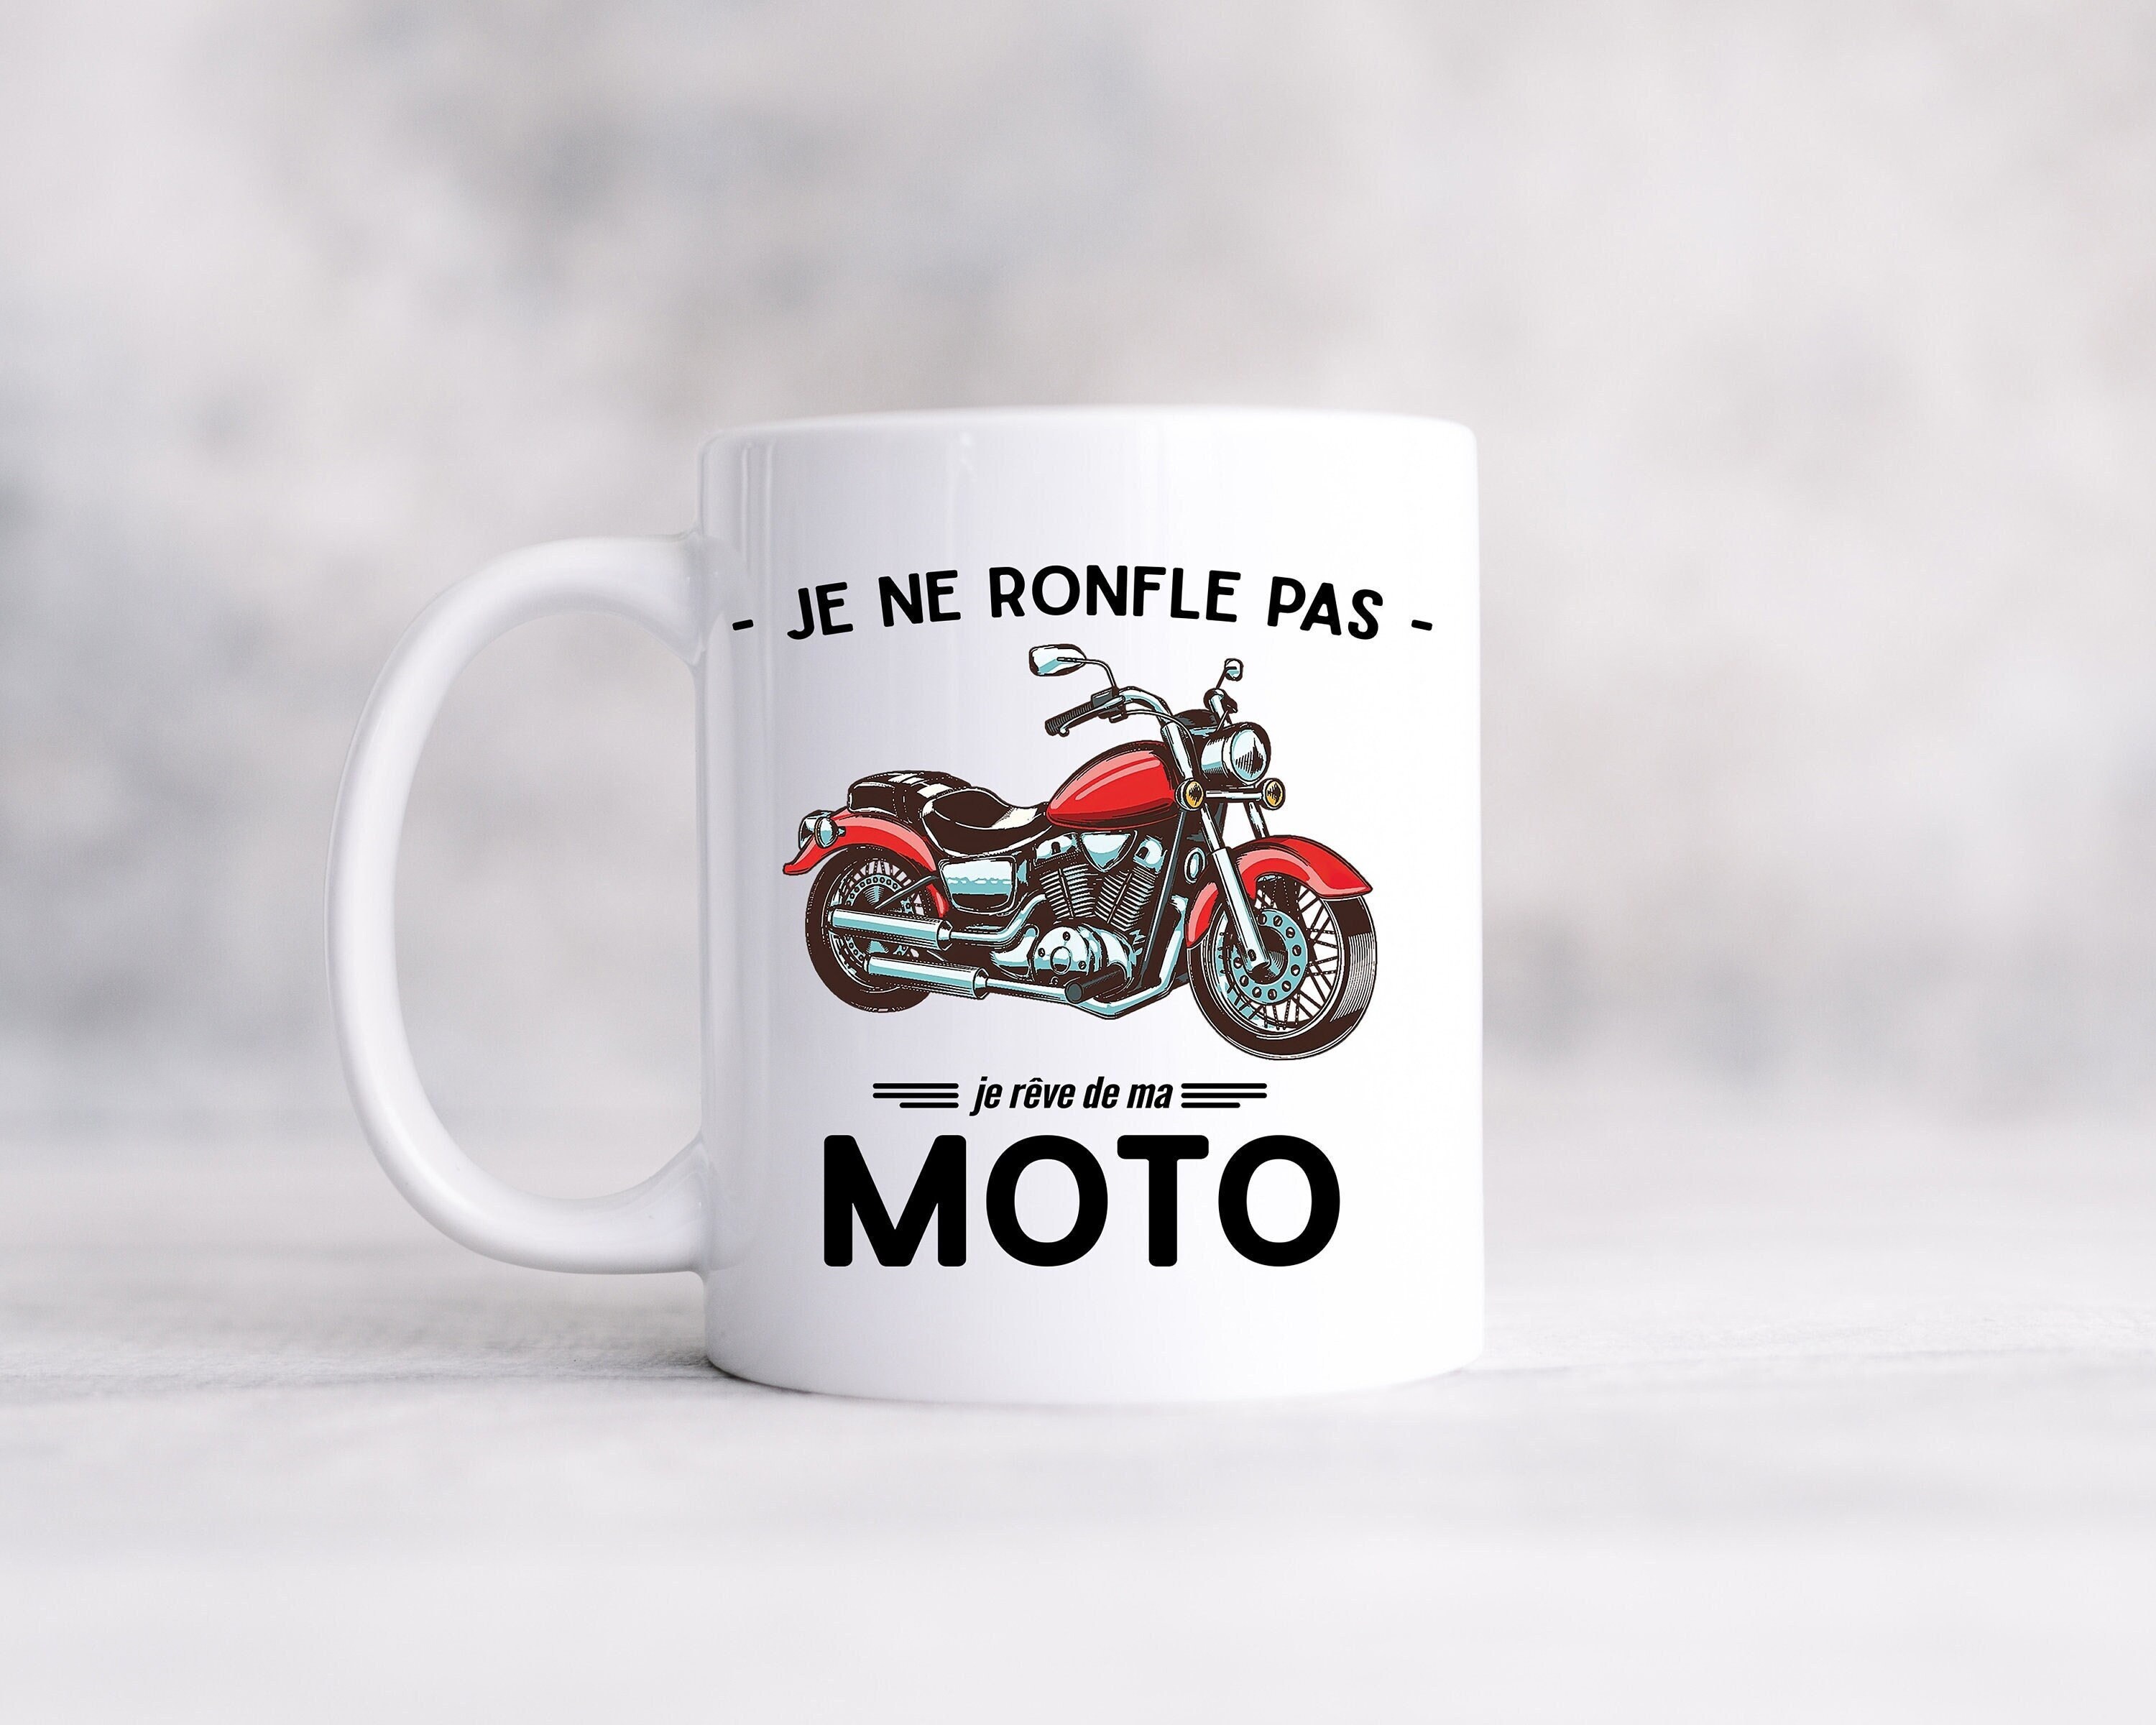 Cadeau Motard, Tasse rigolote moto, Mug cadeau moto, cadeau d'anniversaire  motard, cadeau de Noël biker -  France